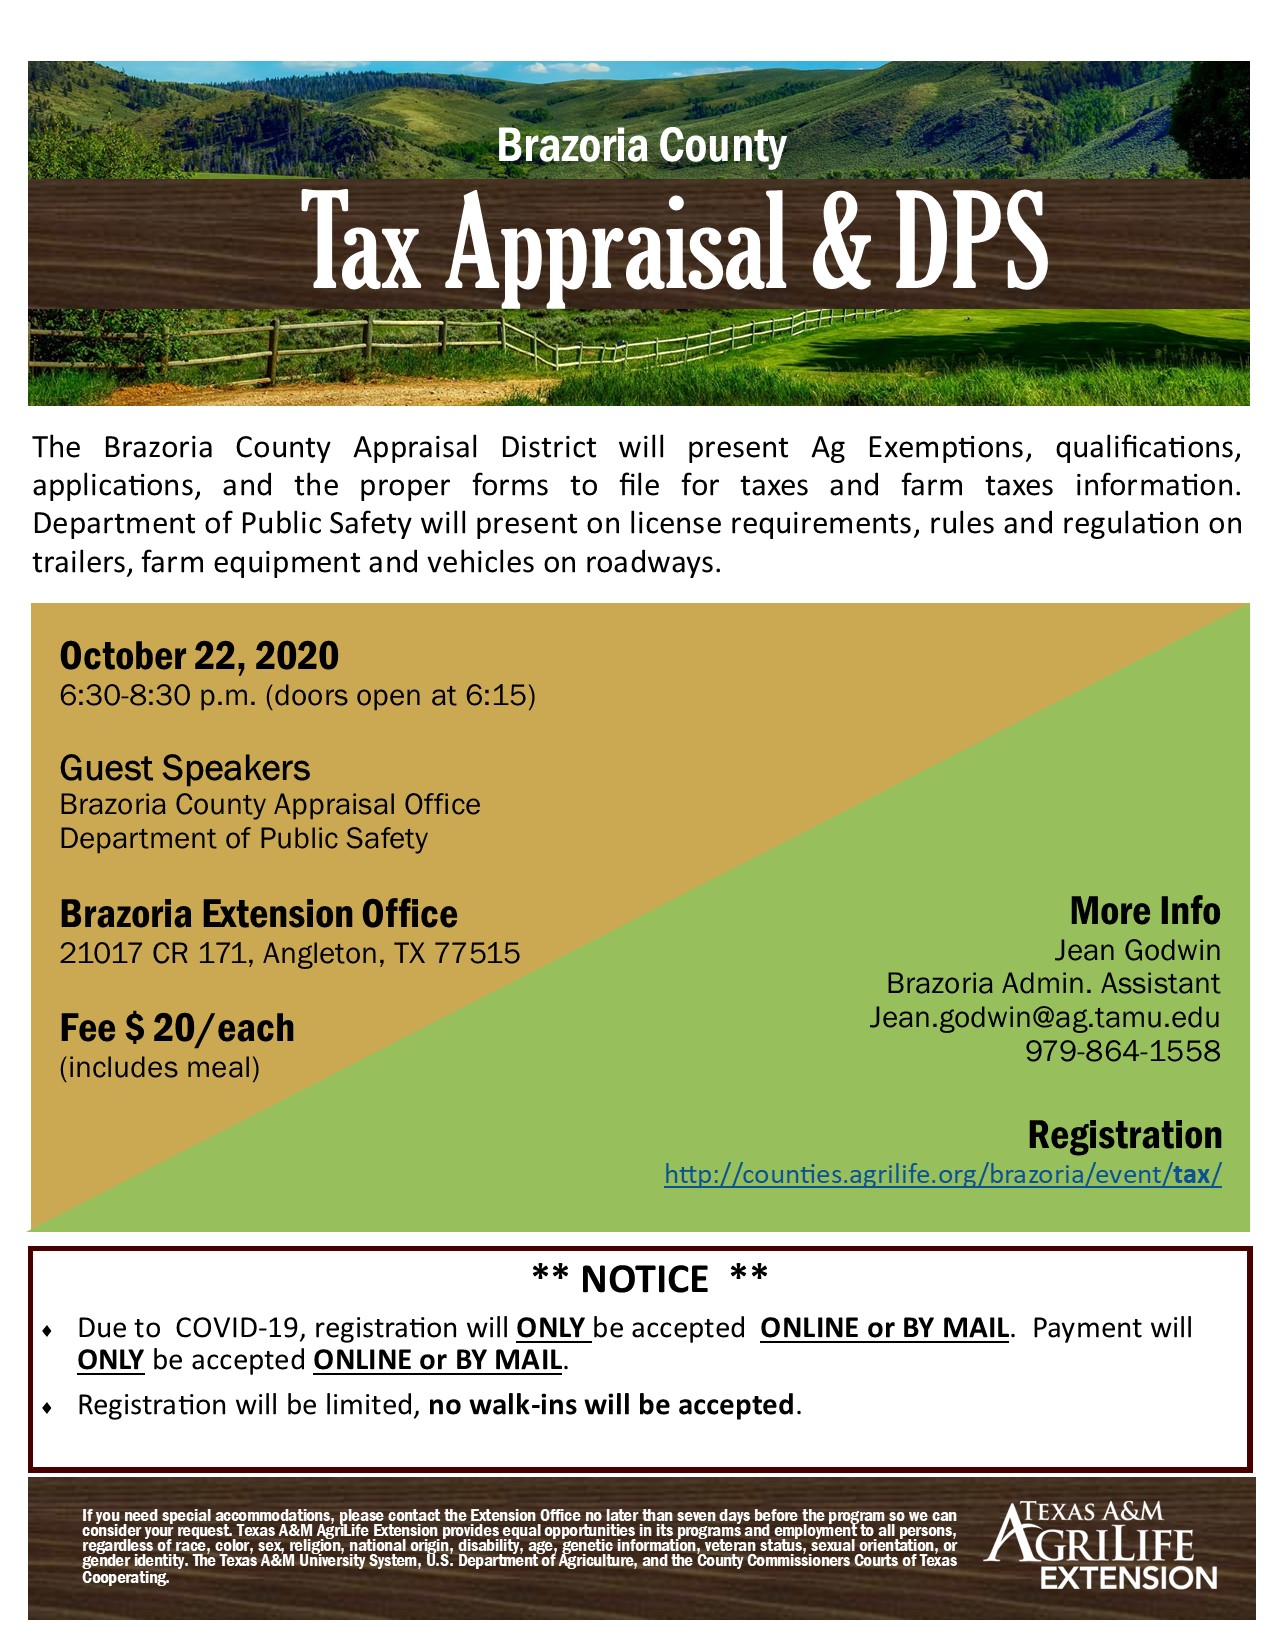 CANCELED - Tax Appraisal & DPS - Brazoria